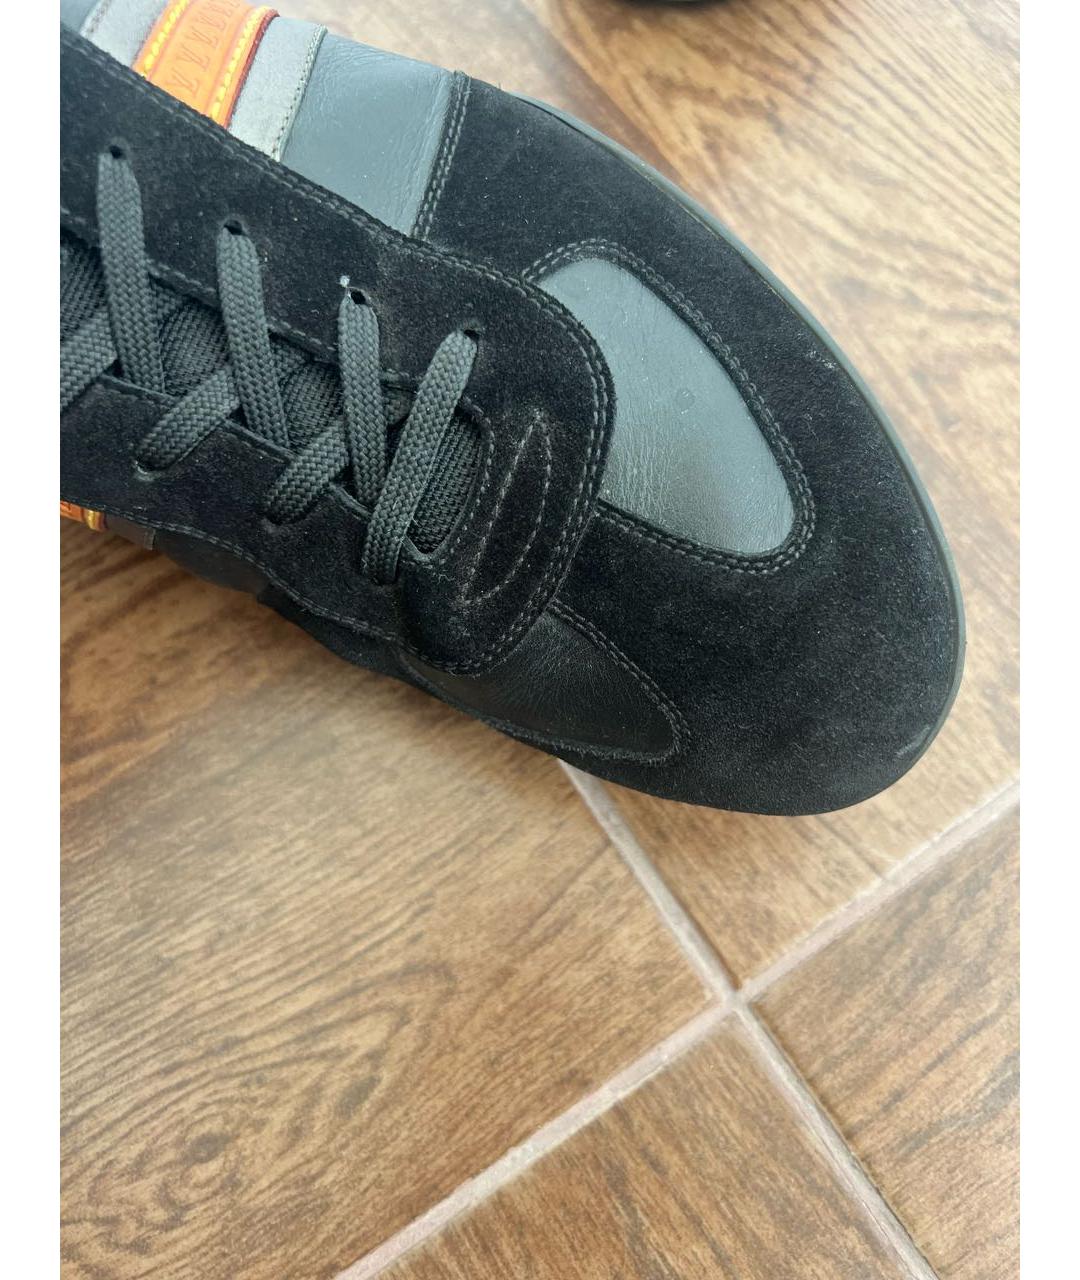 LOUIS VUITTON PRE-OWNED Черные замшевые низкие кроссовки / кеды, фото 6